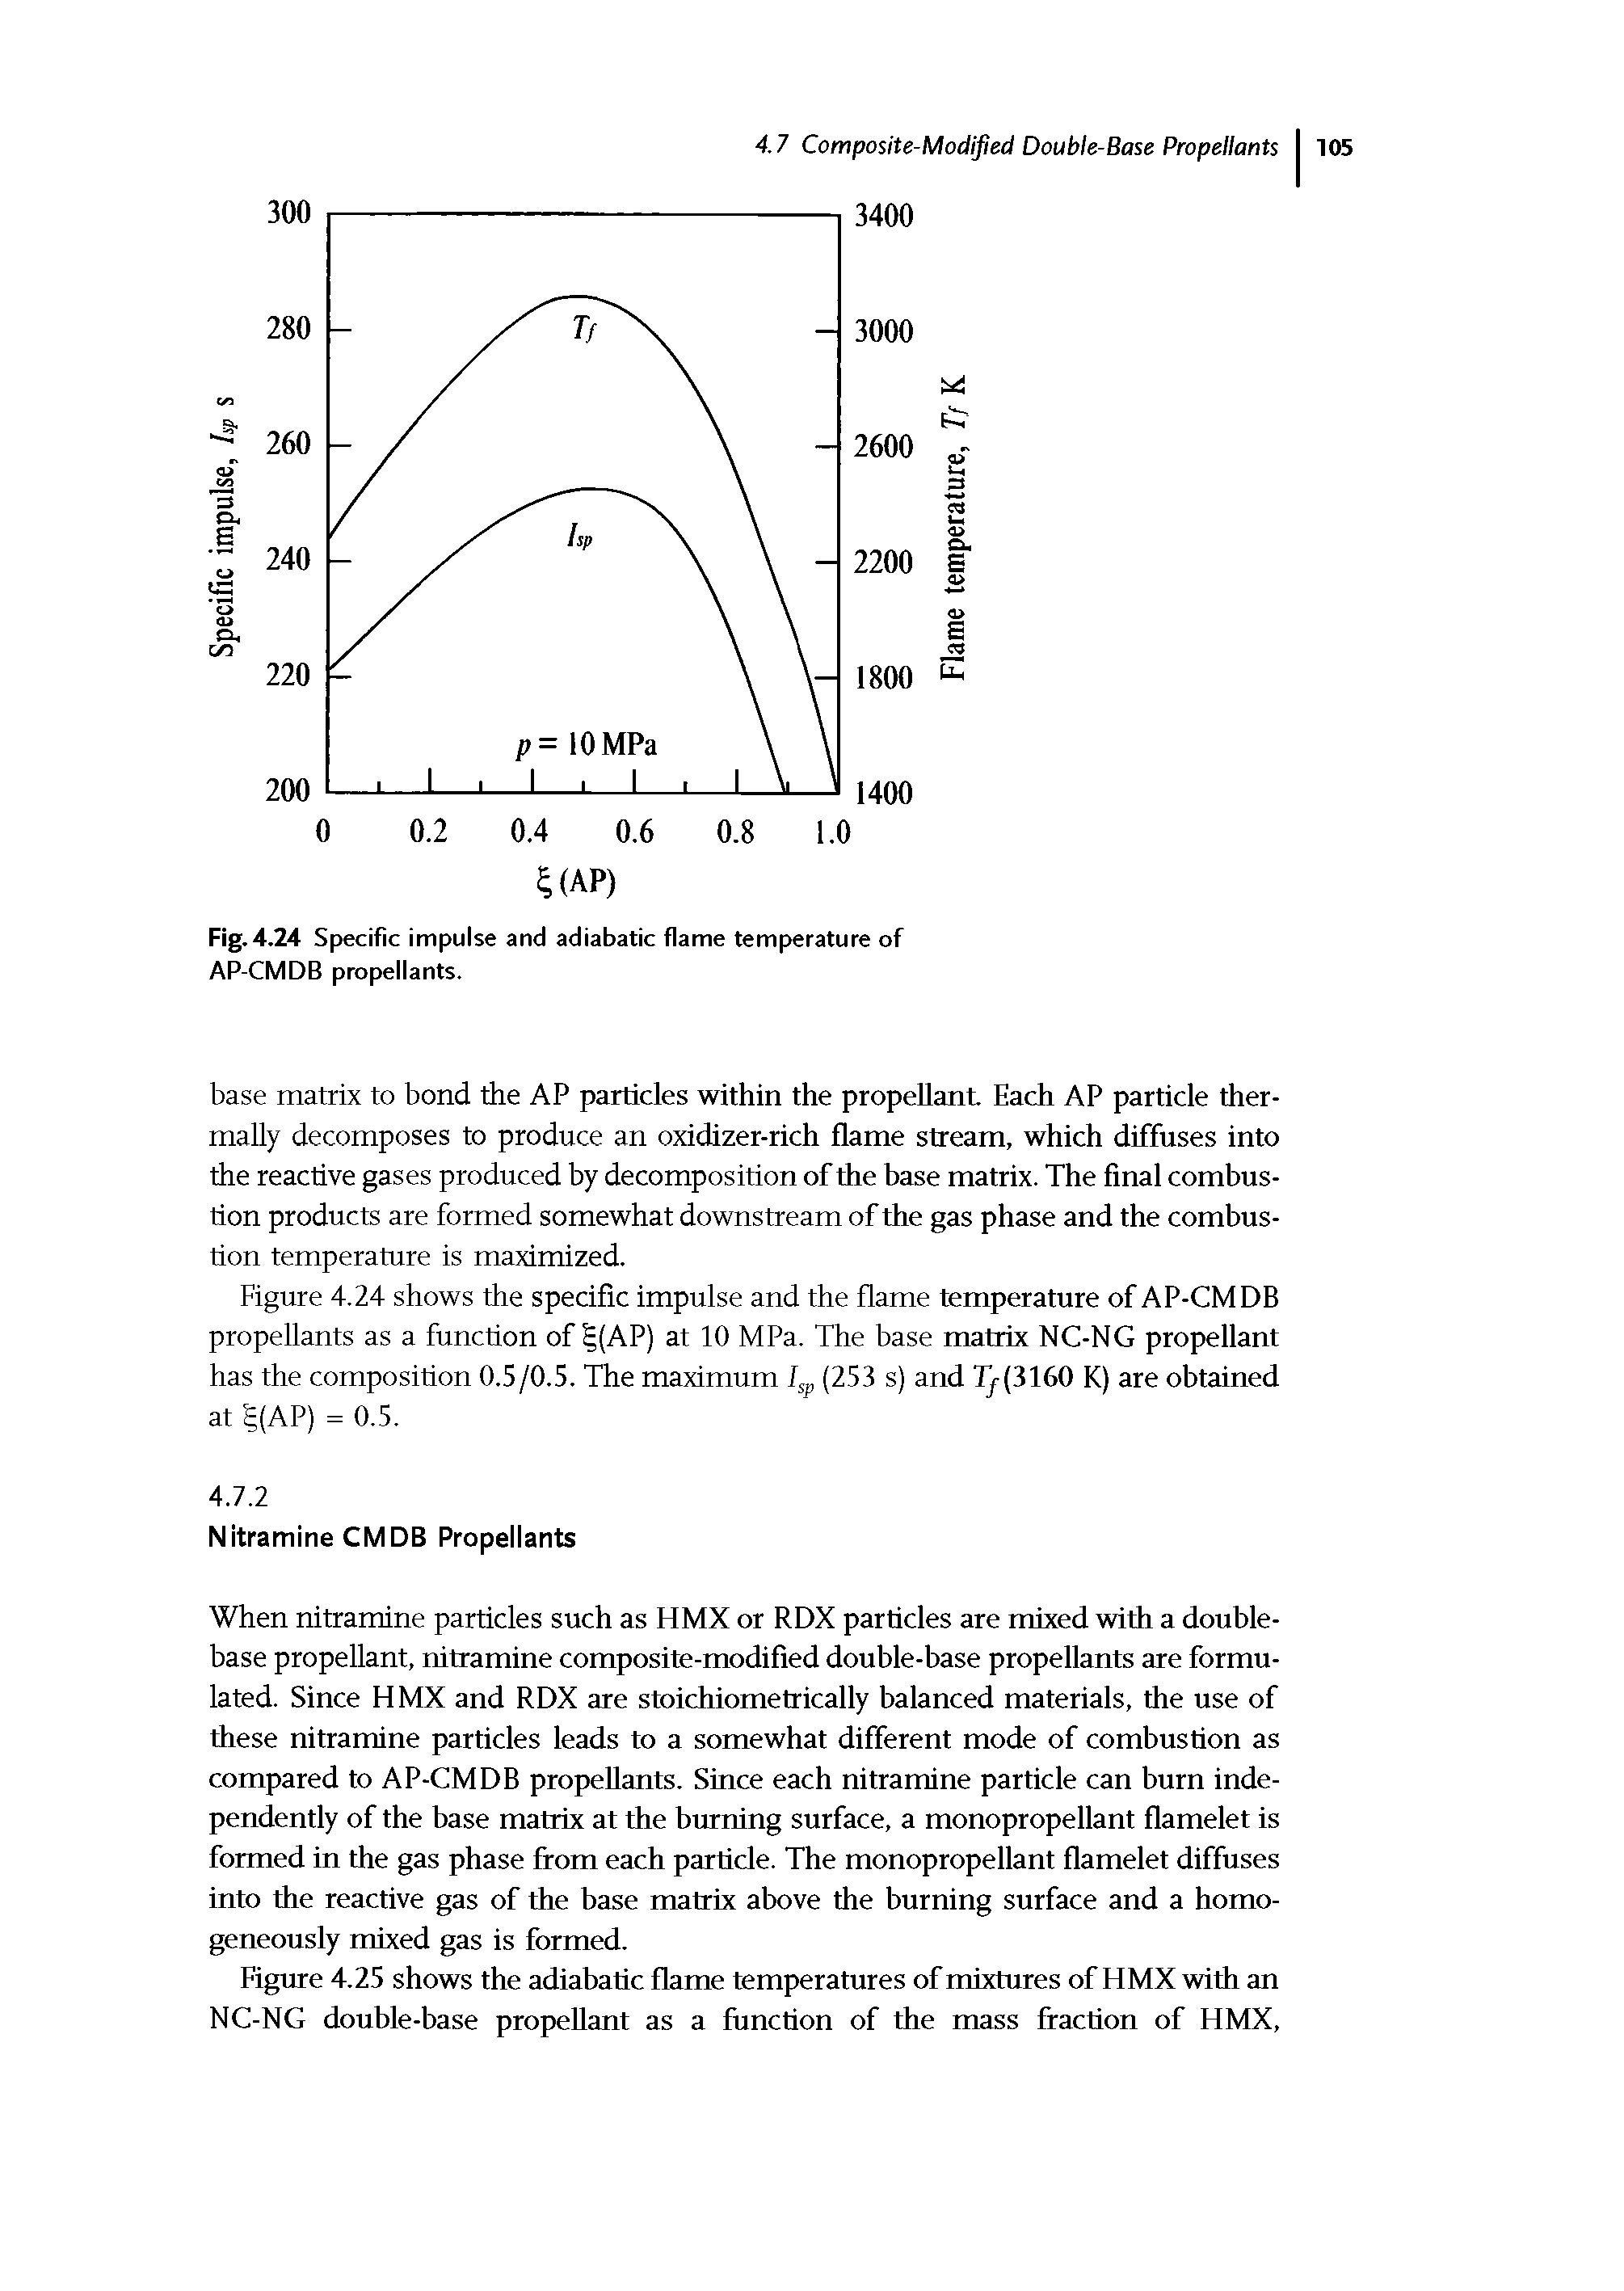 Fig.4.24 Specific impulse and adiabatic flame temperature of AP-CMDB propellants.